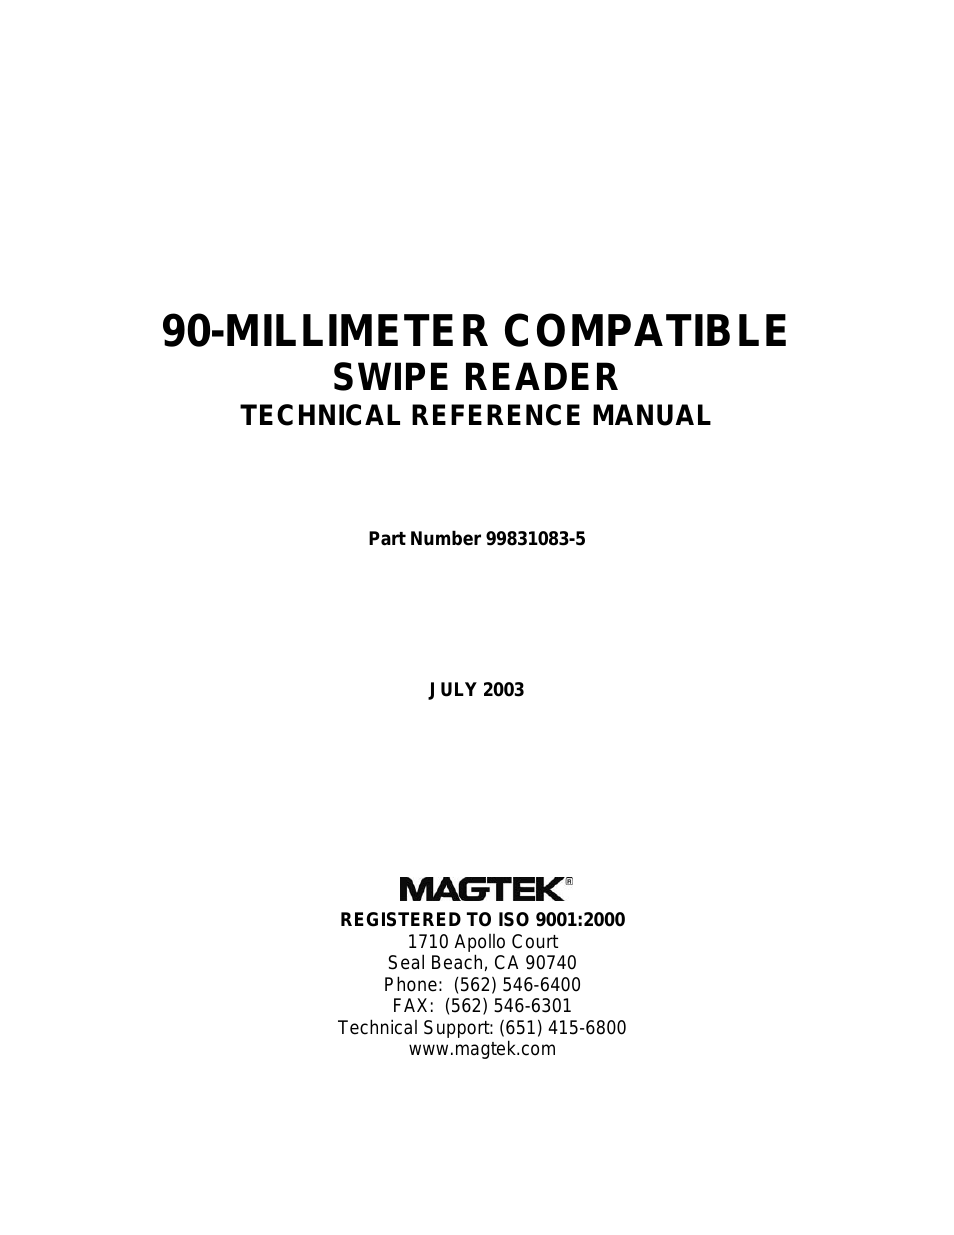 90-MILLIMETER COMPATIBLE SWIPE READER